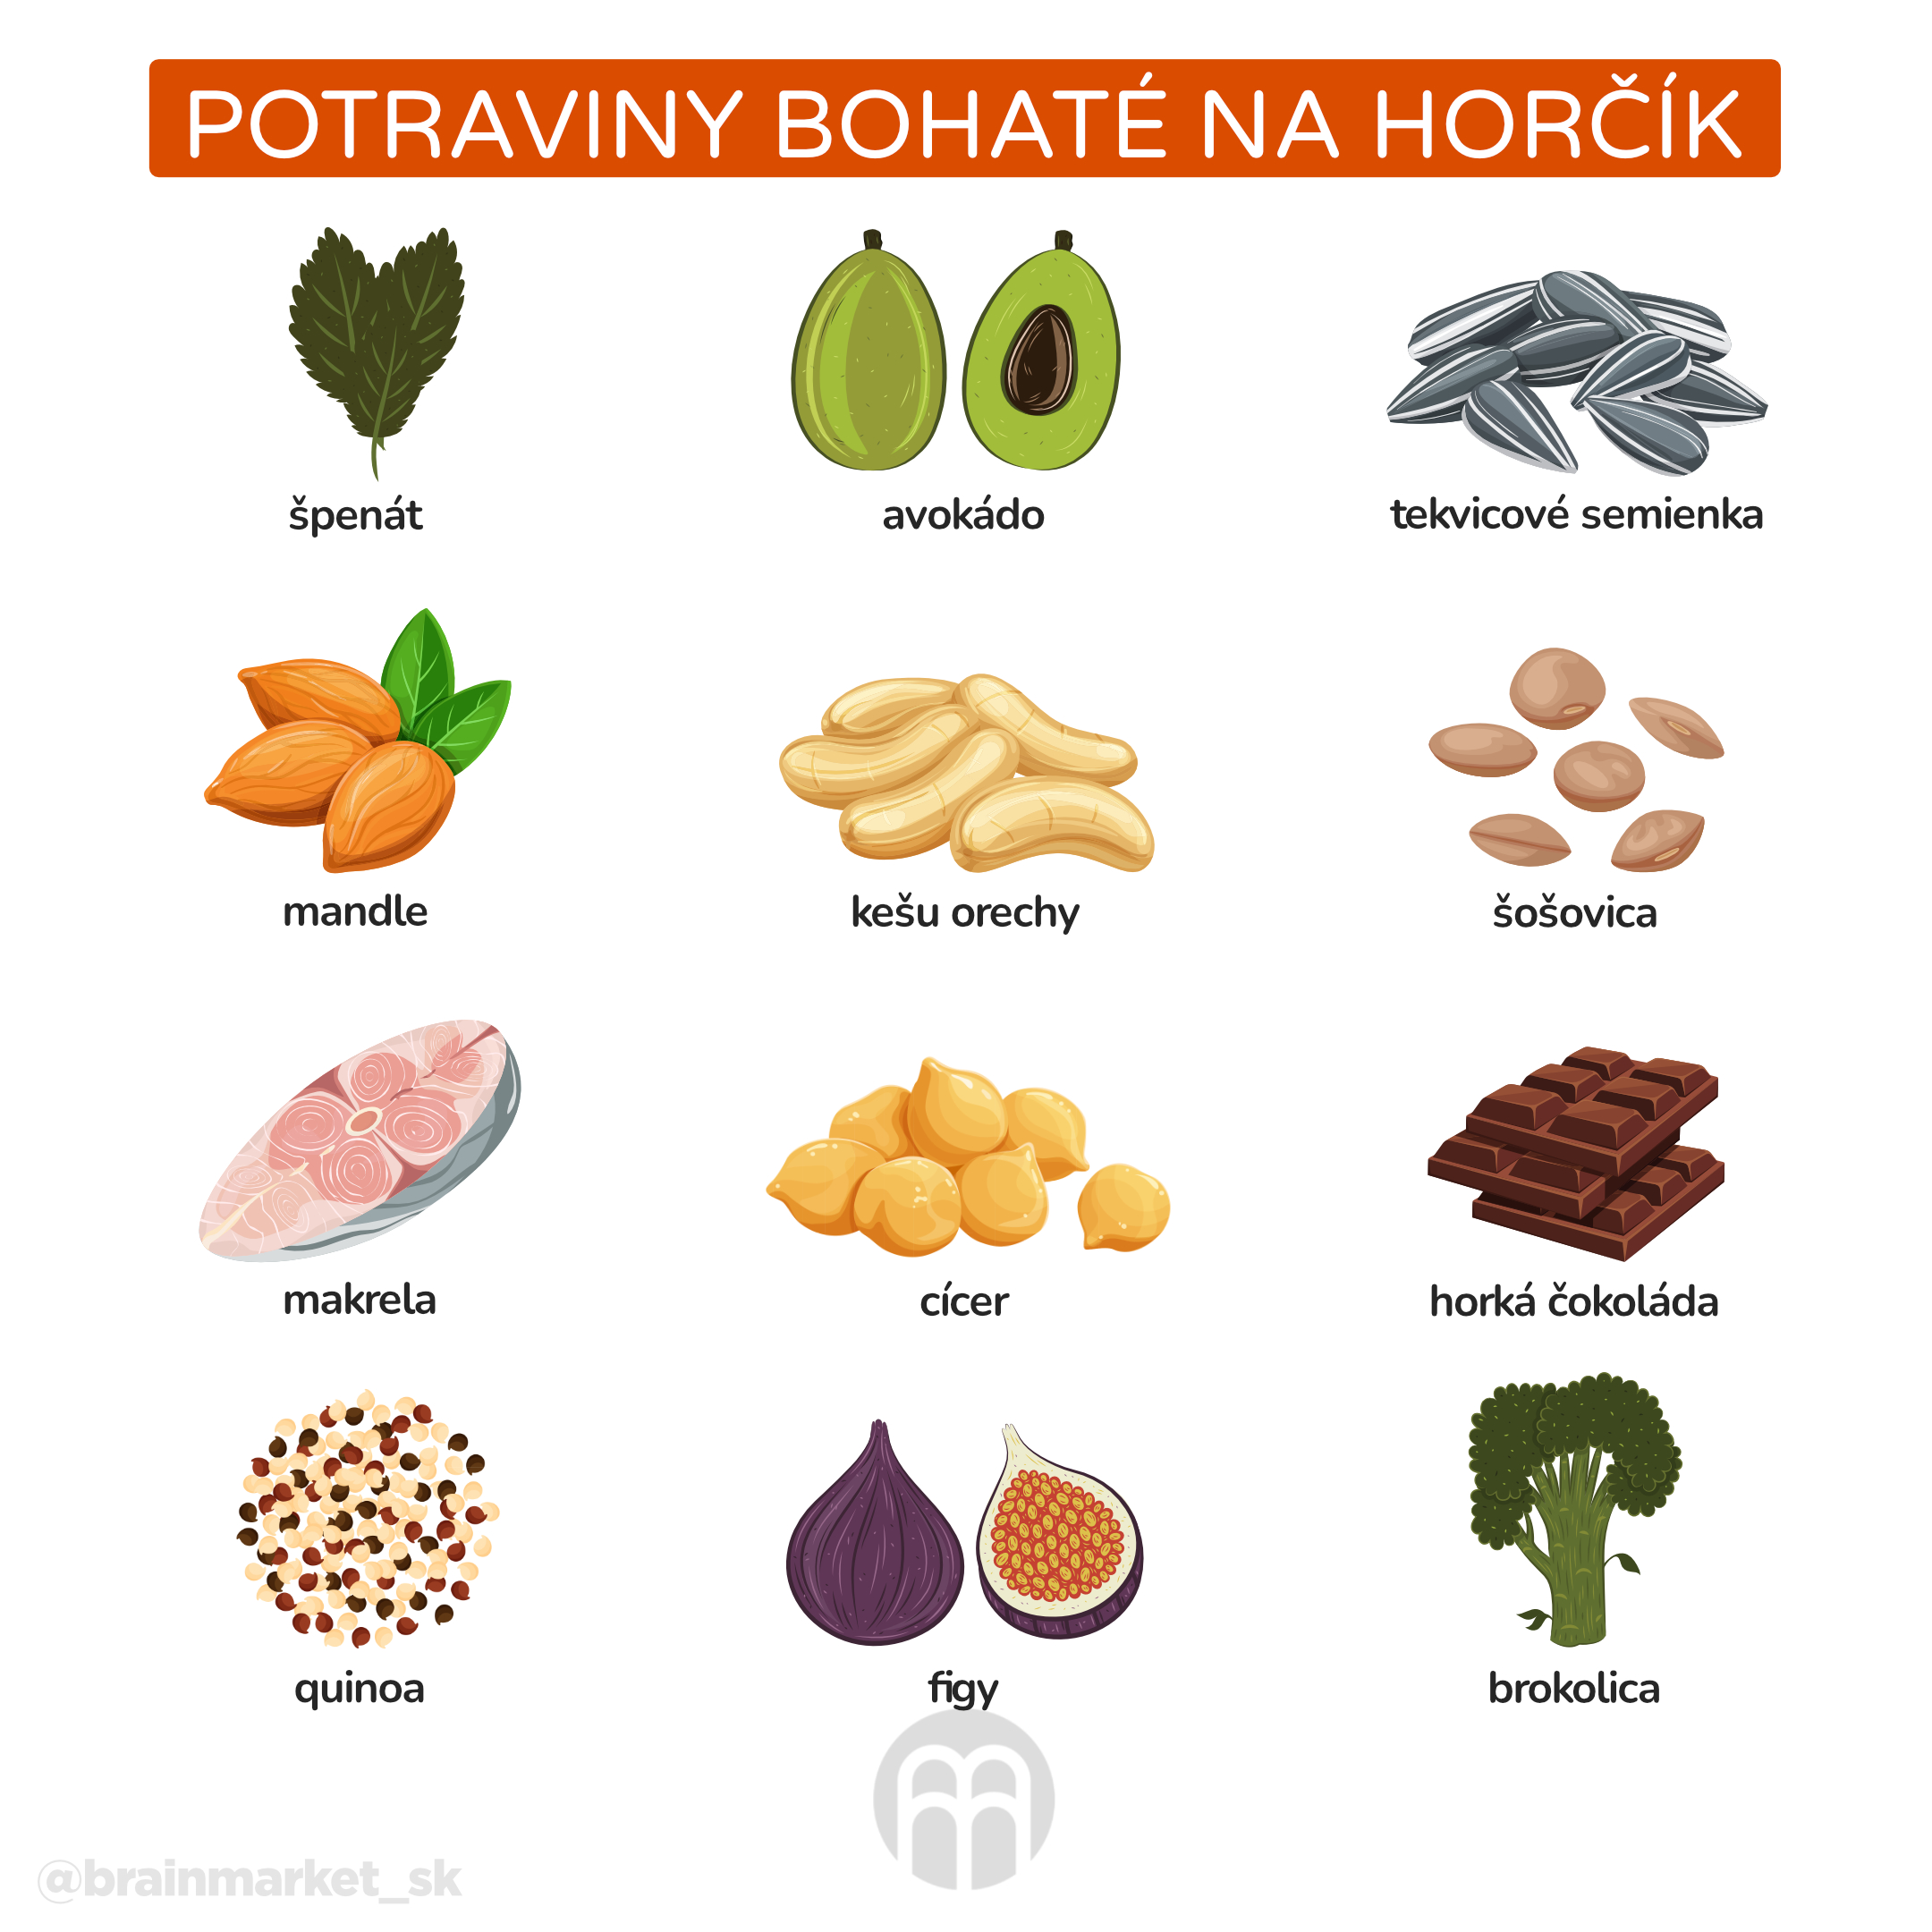 potraviny bohate na horcik_infografika_cz